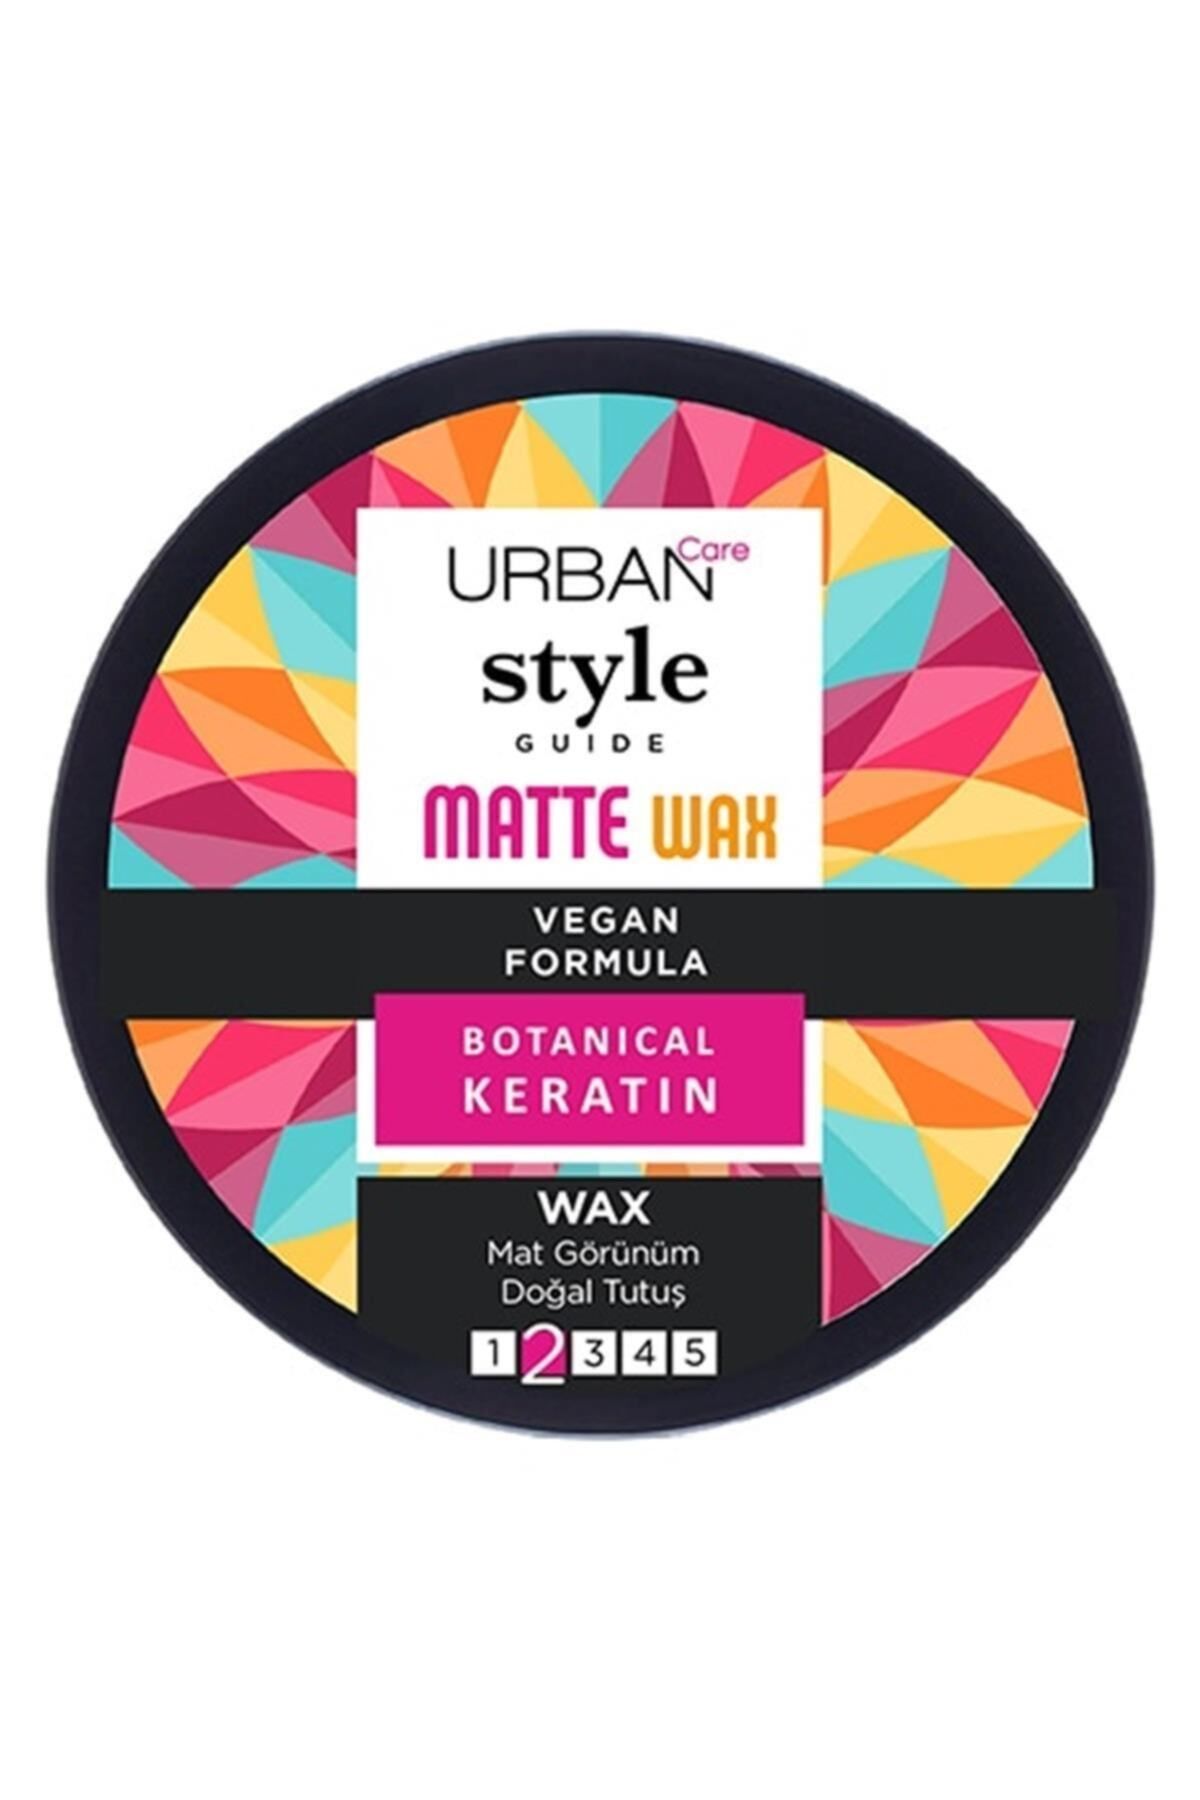 Urban Care Care Style Guide Matte Wax Matte Look Hair Styling Wax-vegan-100 ml DKÜRN408